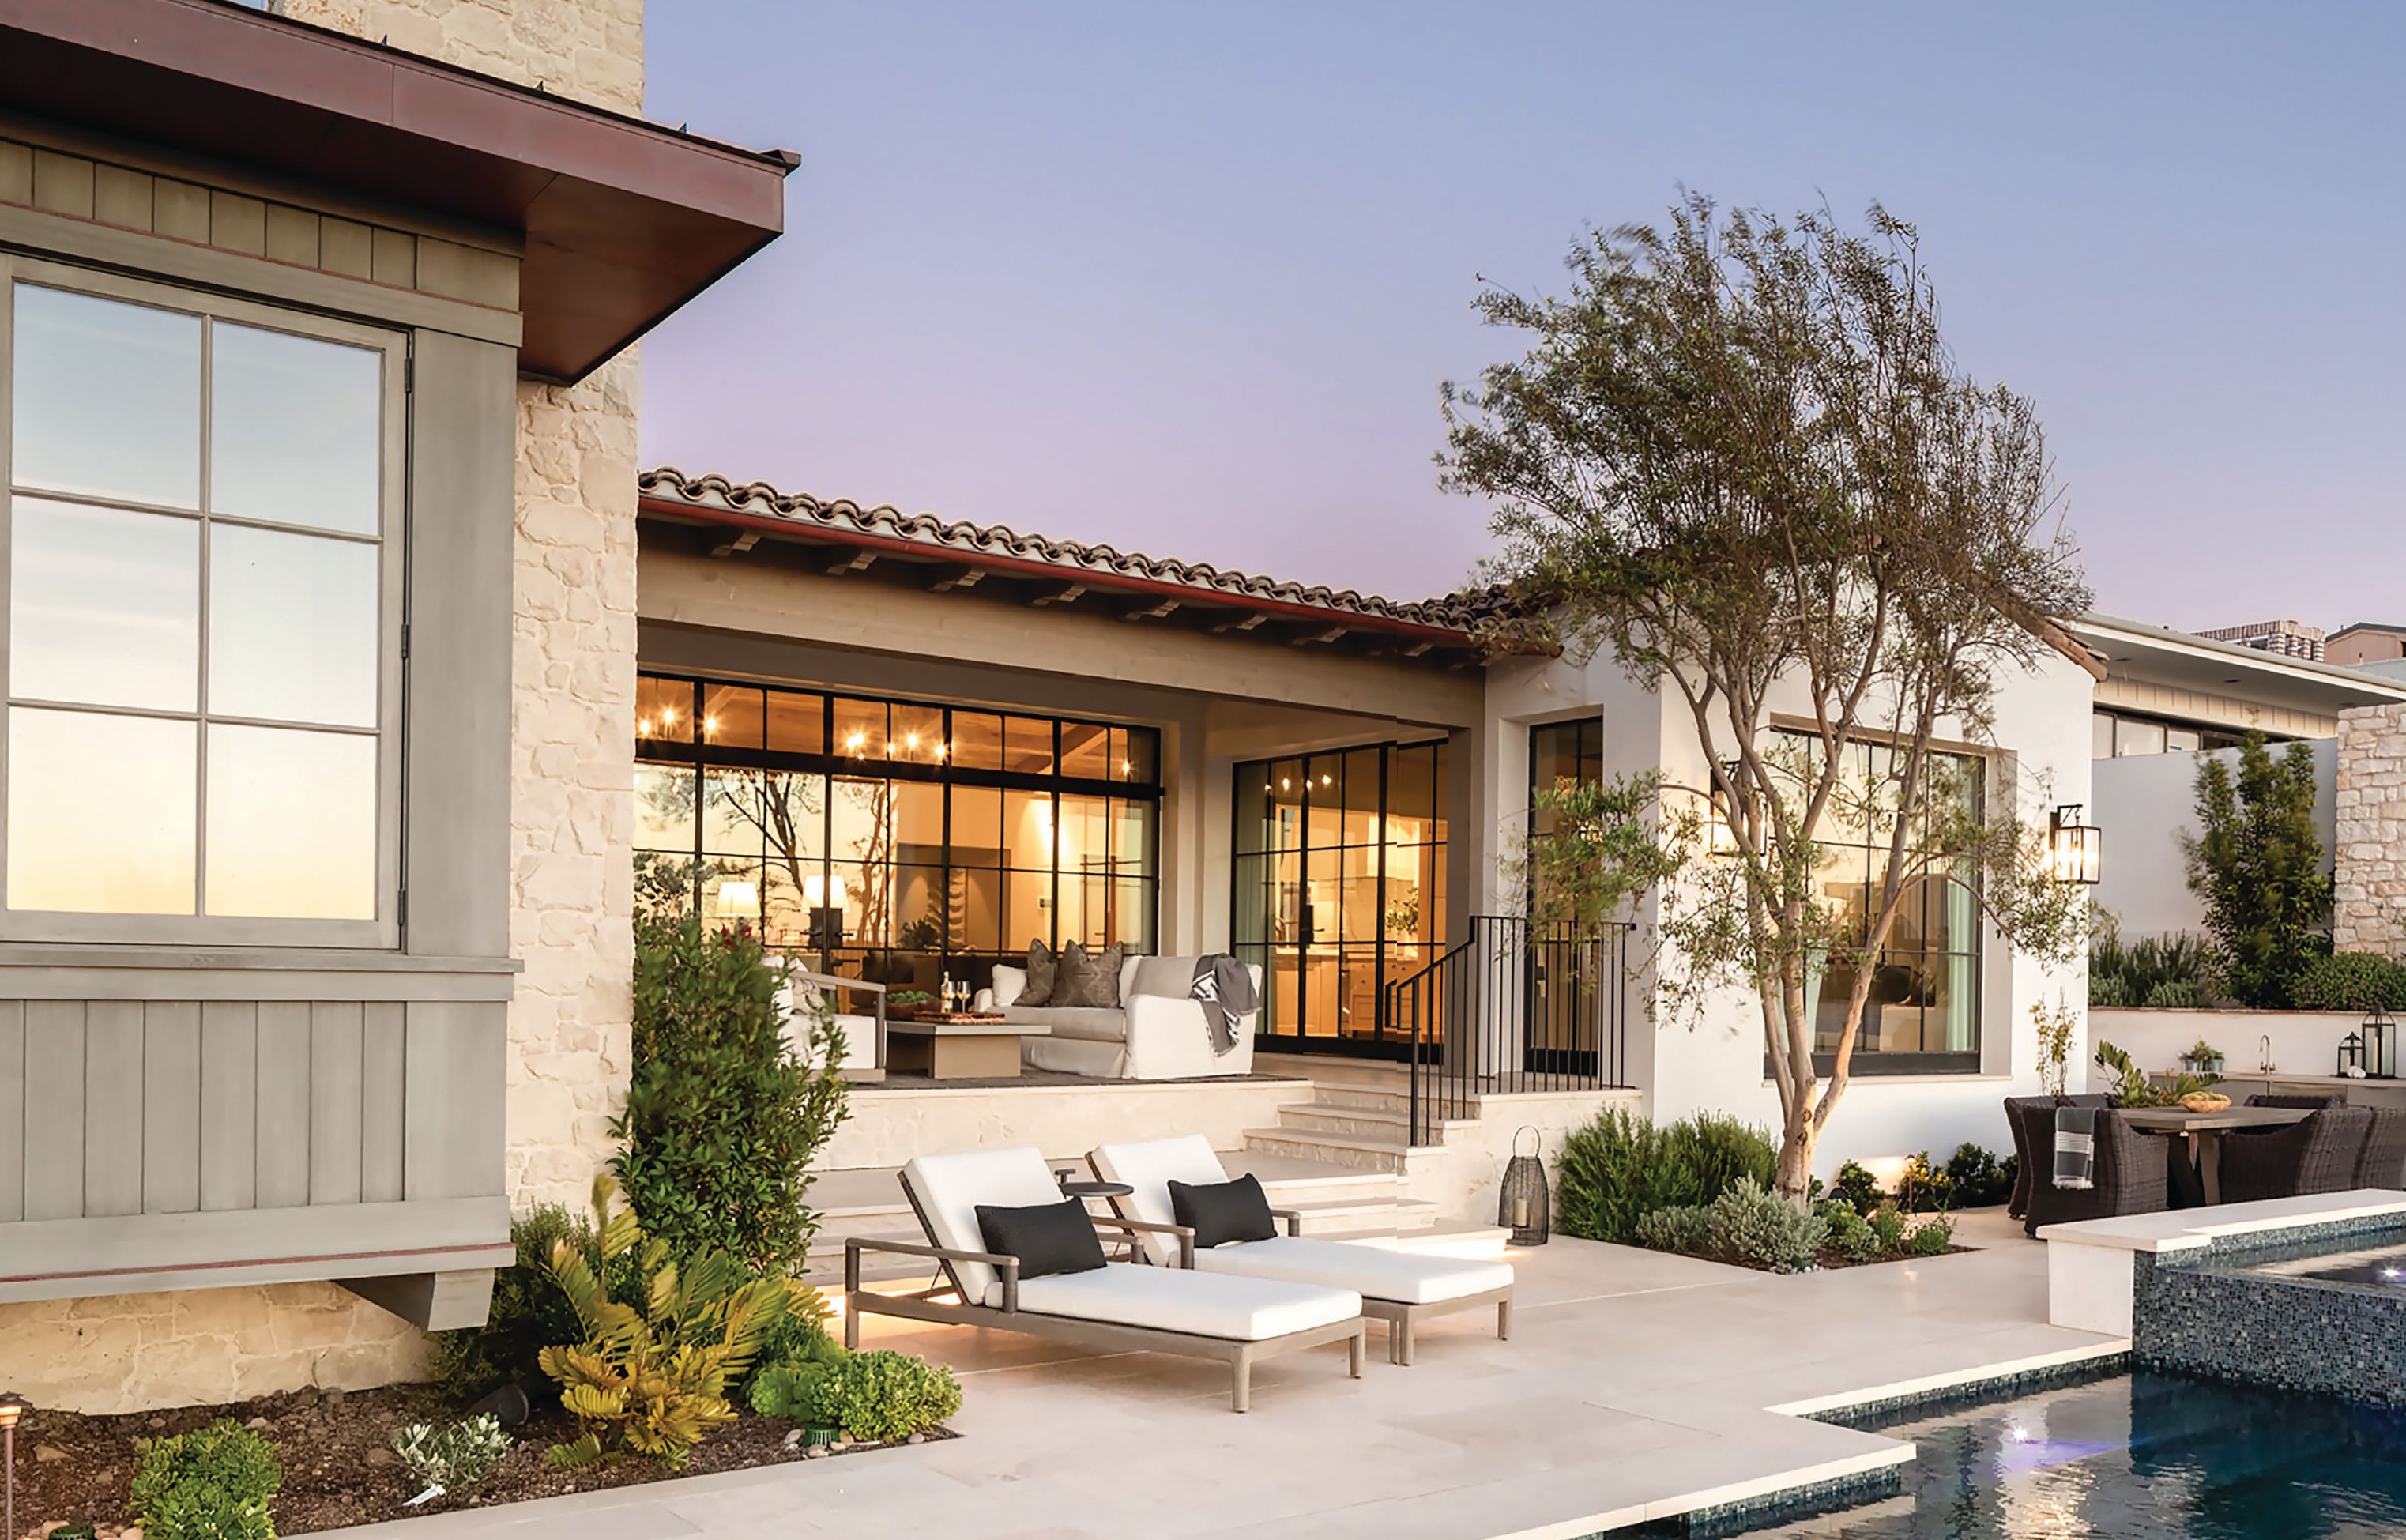 This Dana Point Home's Mediterranean Style Directed Insert Design's Interior Design Choices